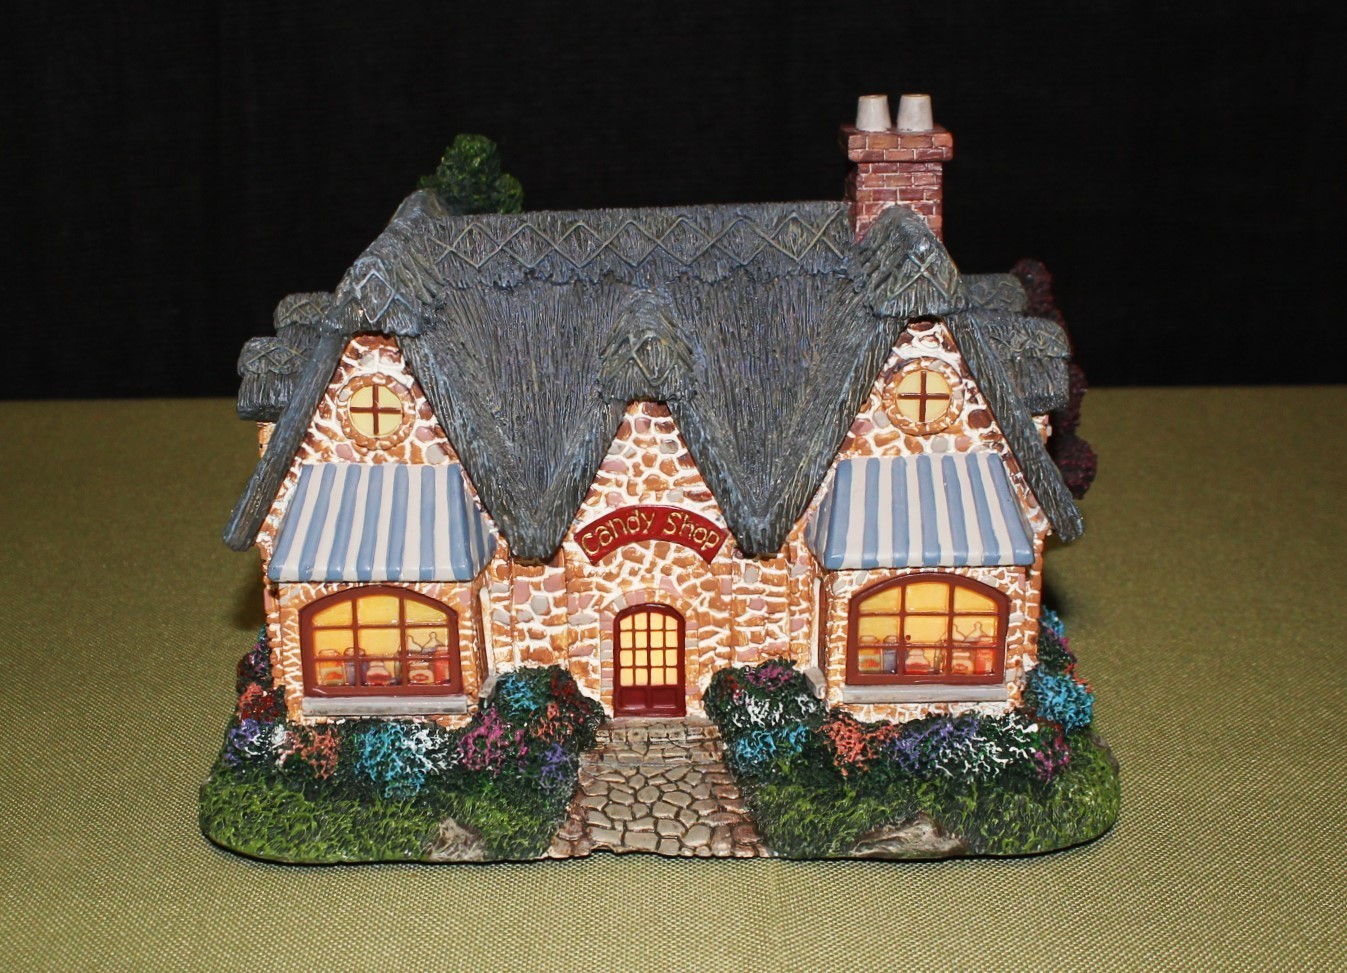 Thomas Kinkade 2003 “Candy Shop” Lamplight Hawthorne Village Light-Up House